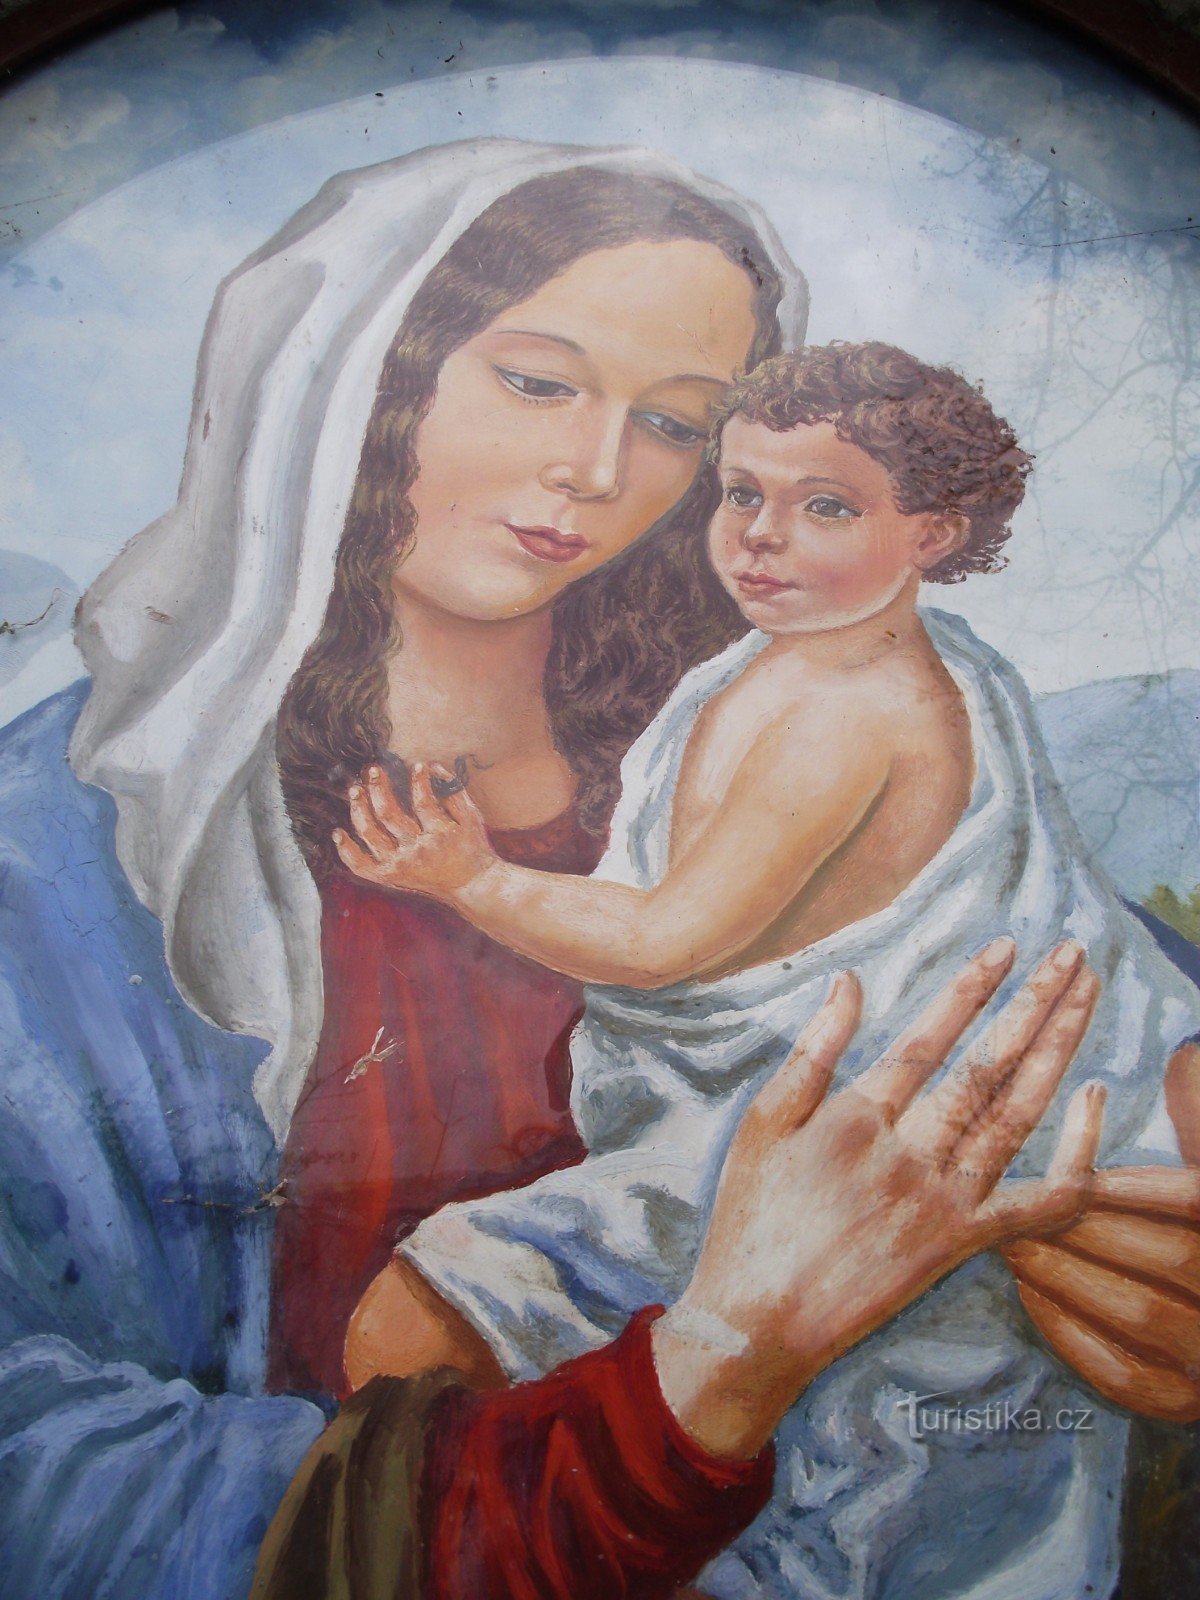 Křtinská 的圣母玛利亚